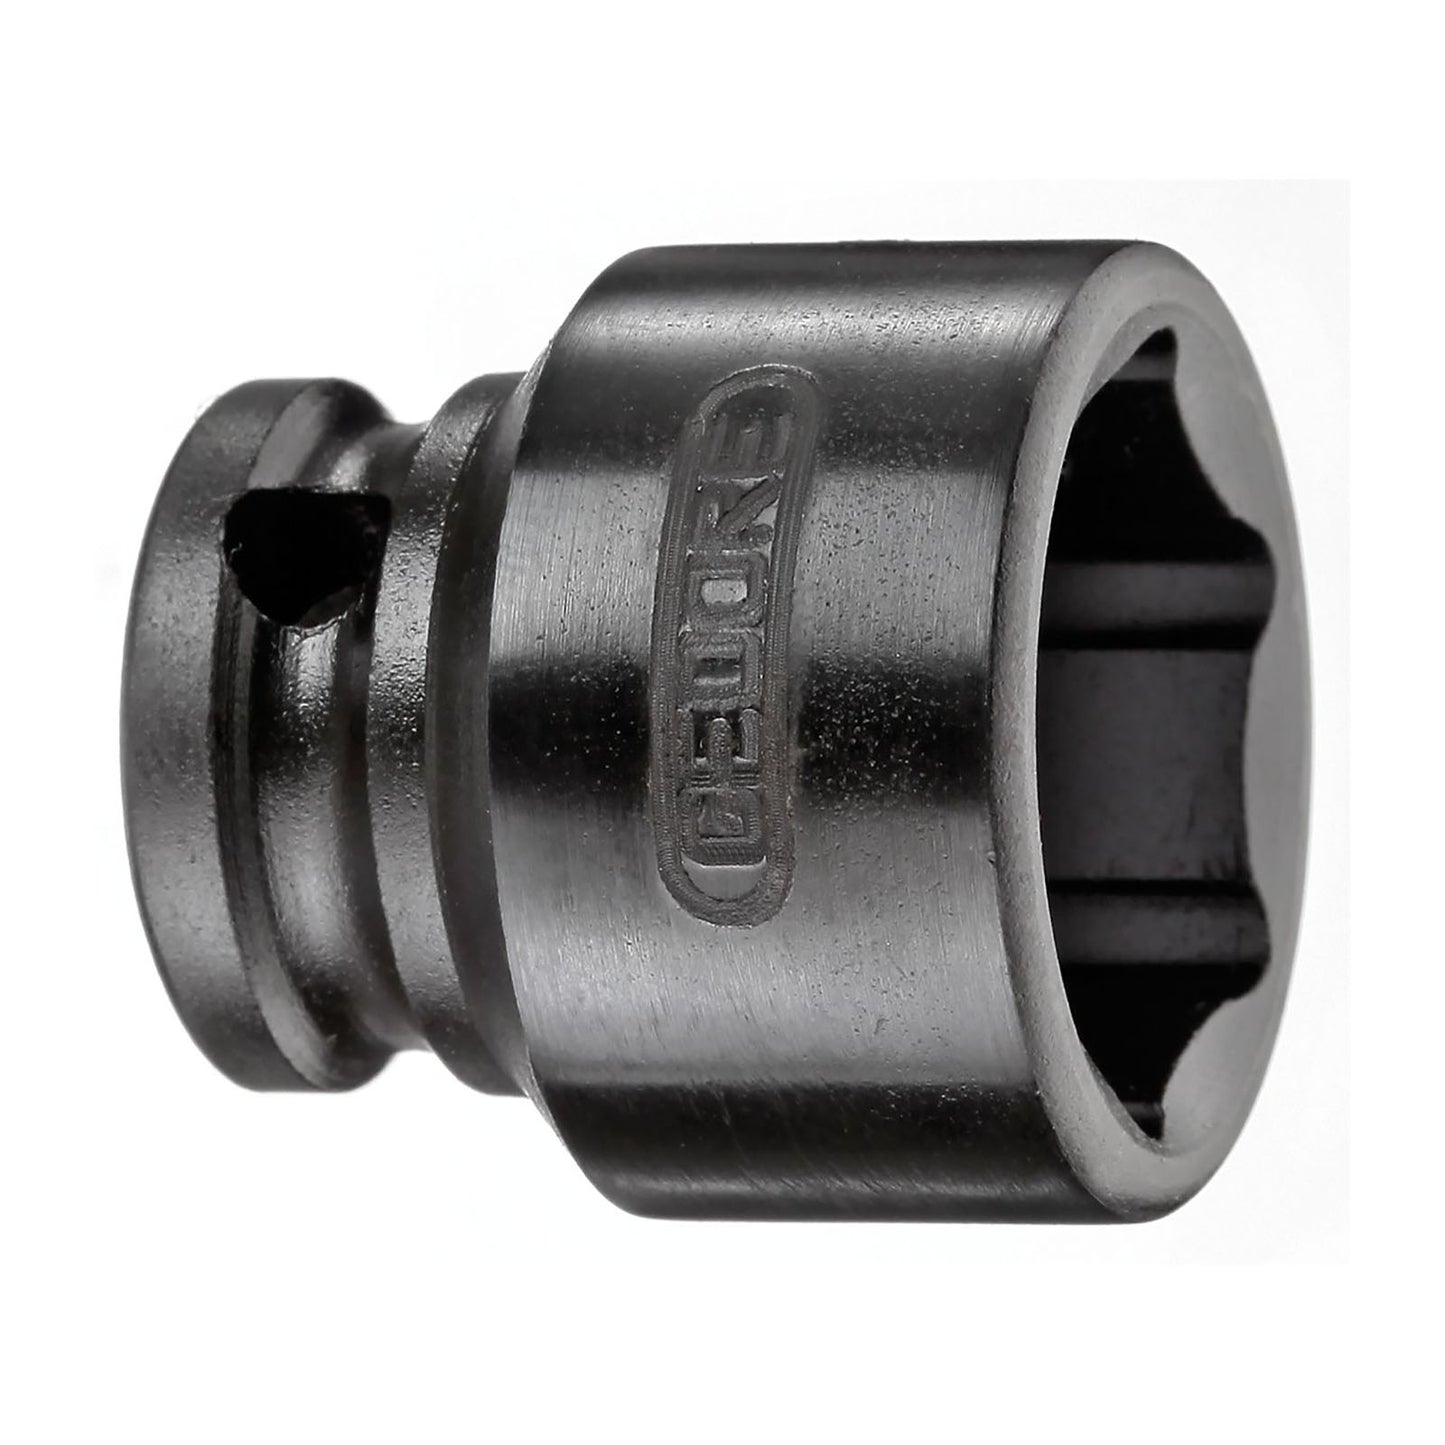 GEDORE K 30 13 - Hex Impact Socket 3/8", 13 mm (6251830)